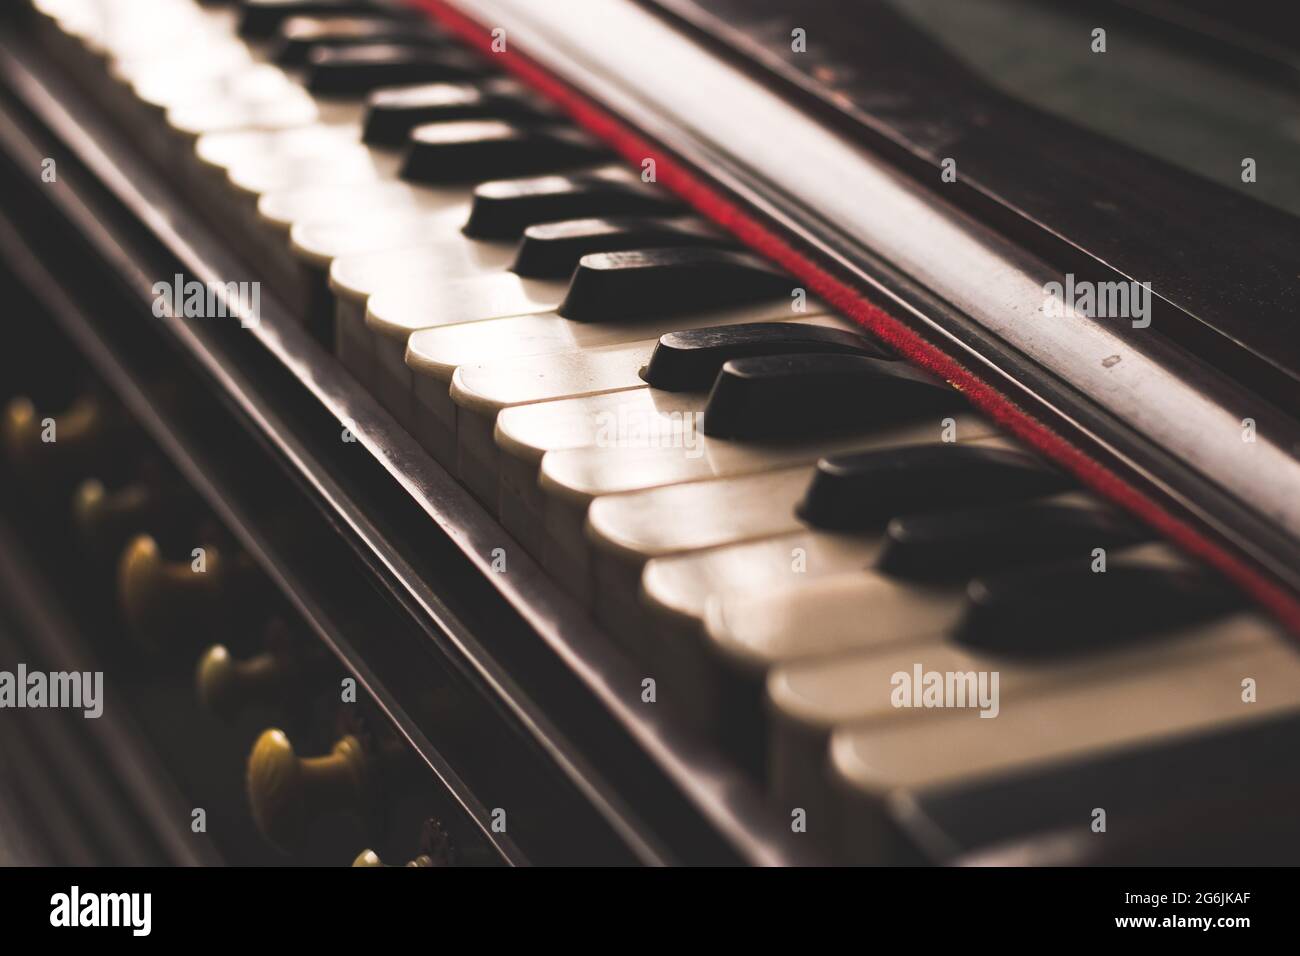 Harmonium keys with vintage looks  stock image, selective focus. Stock Photo